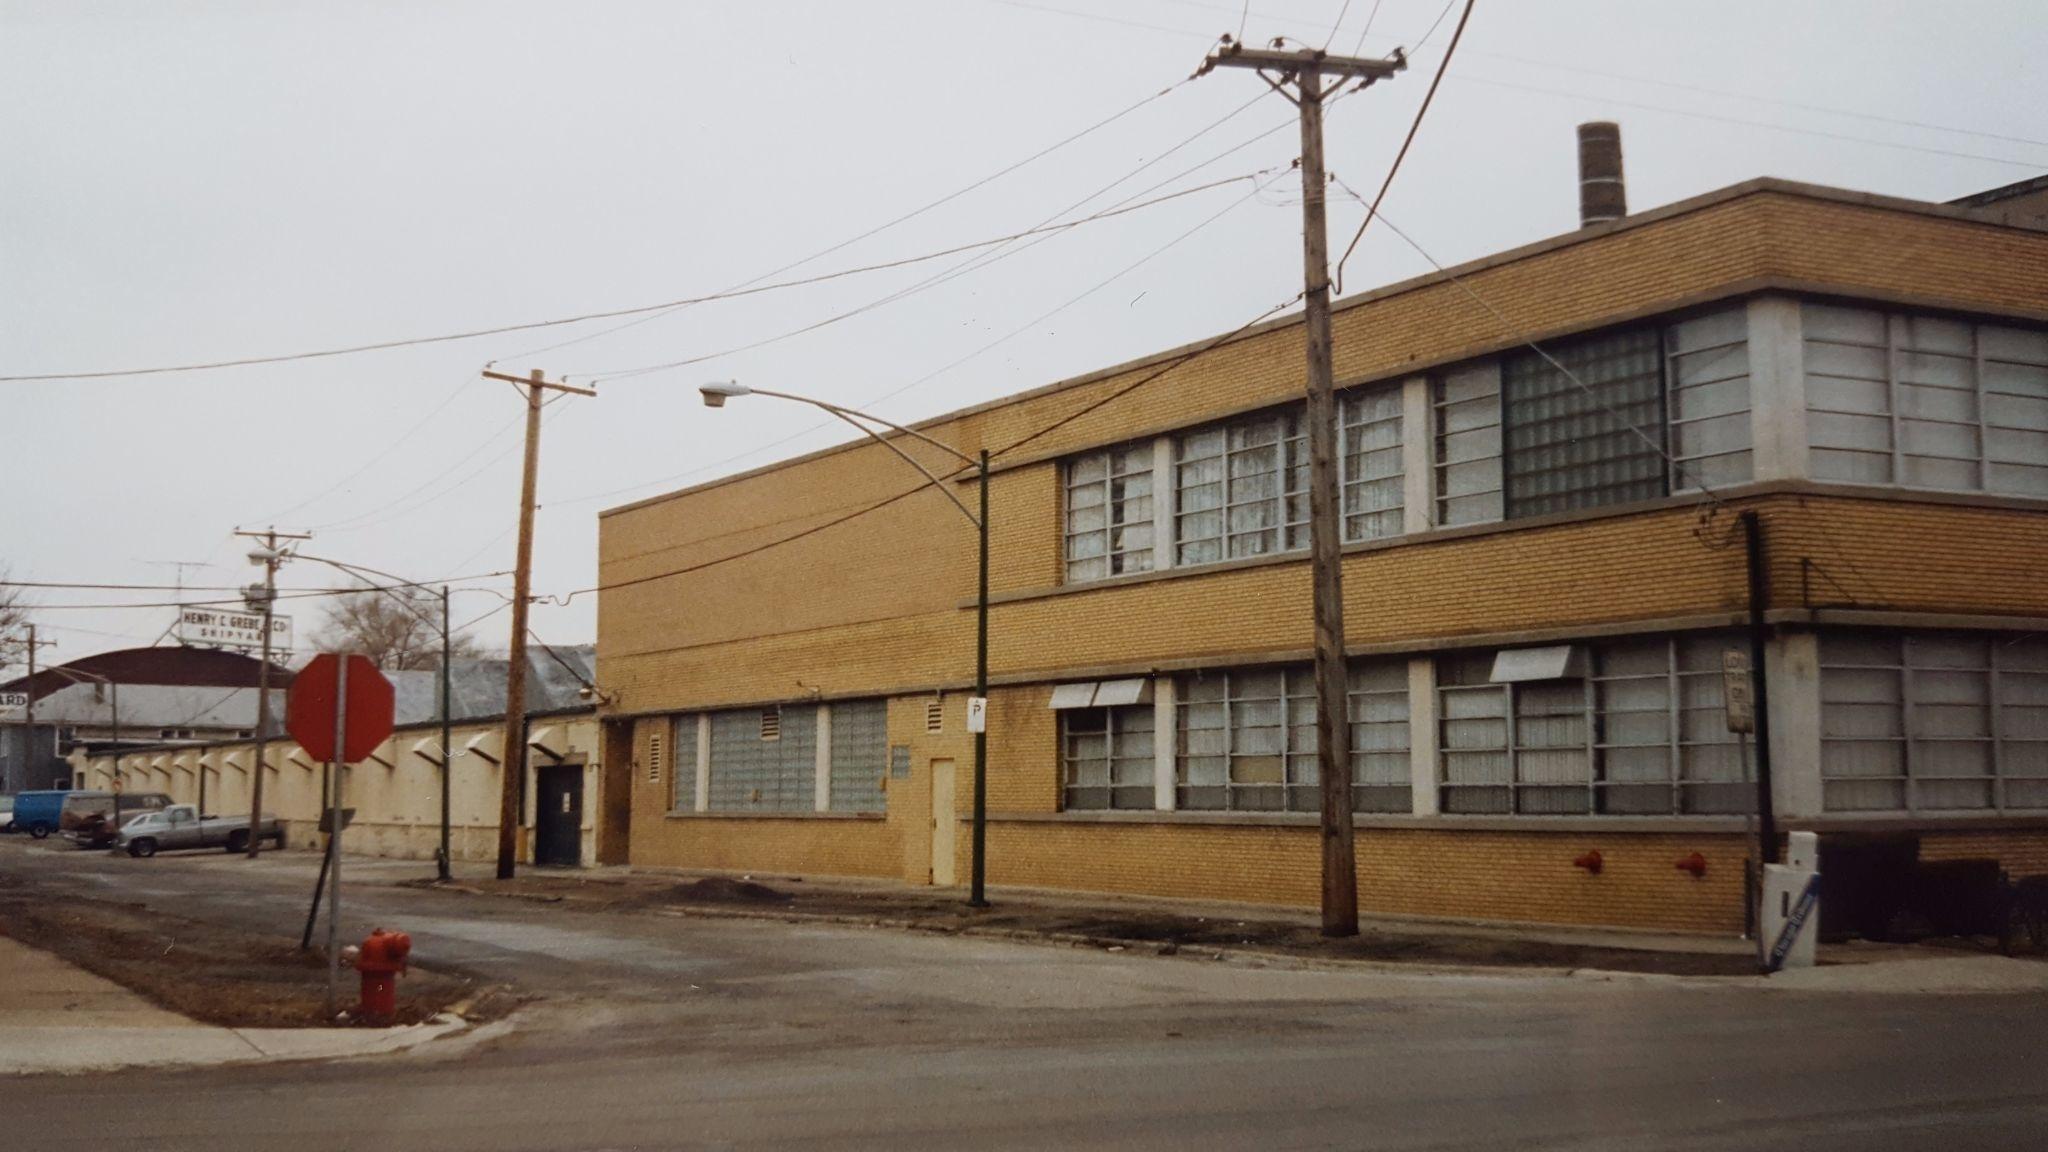 Bally warehouse, 1980